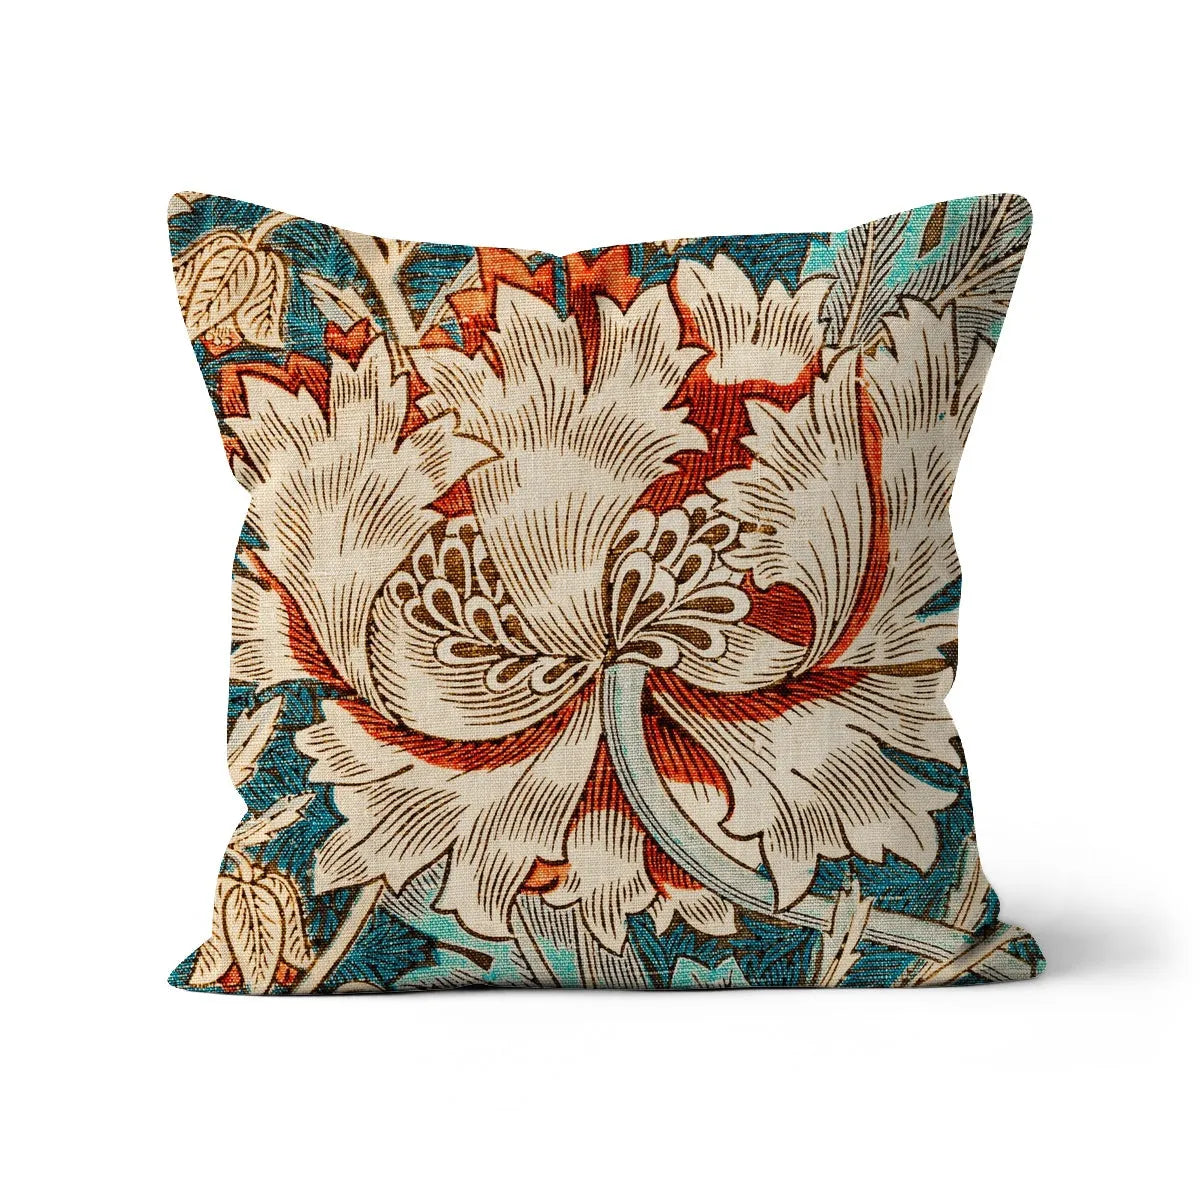 Honeysuckle Too - William Morris Cushion - Decorative Throw Pillow - Linen / 18’x18’ - Throw Pillows - Aesthetic Art